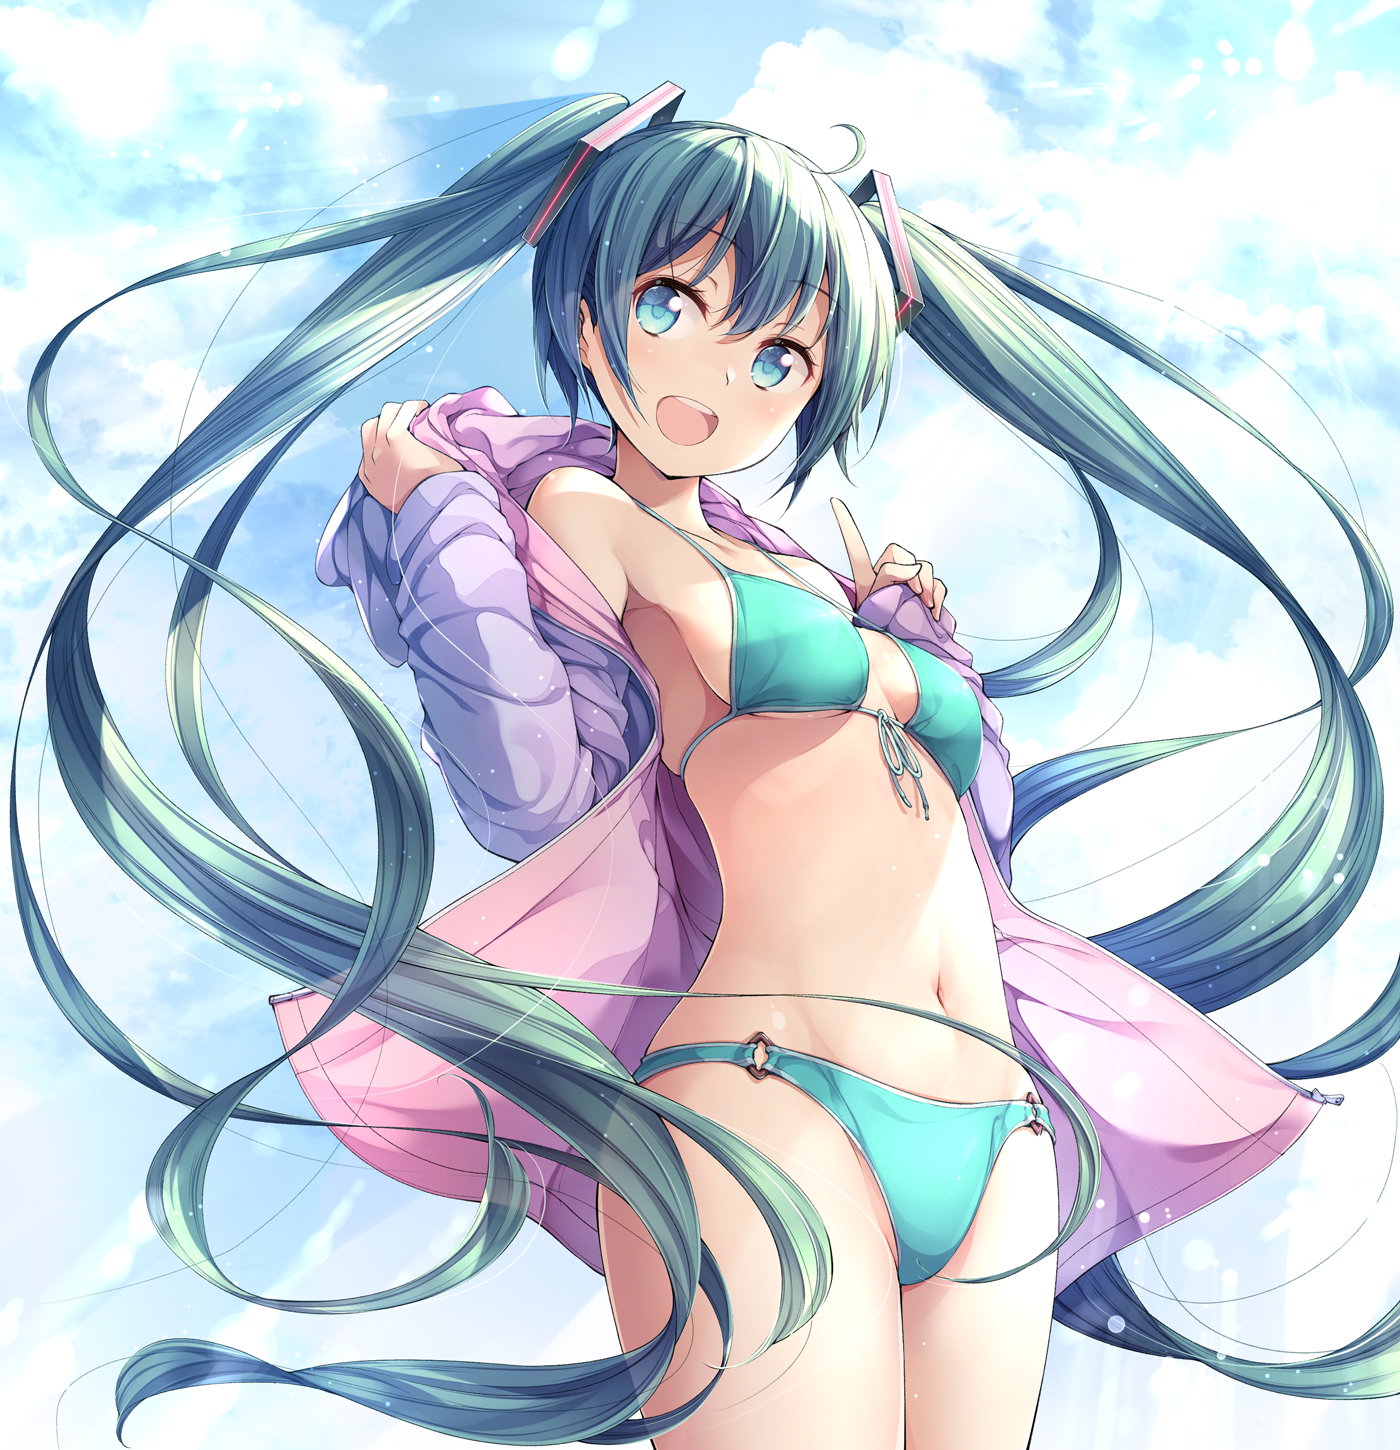 Relax on the beach - Hatsune Miku, Anime, Not anime, Swimsuit, Art, Anime art, Vocaloid